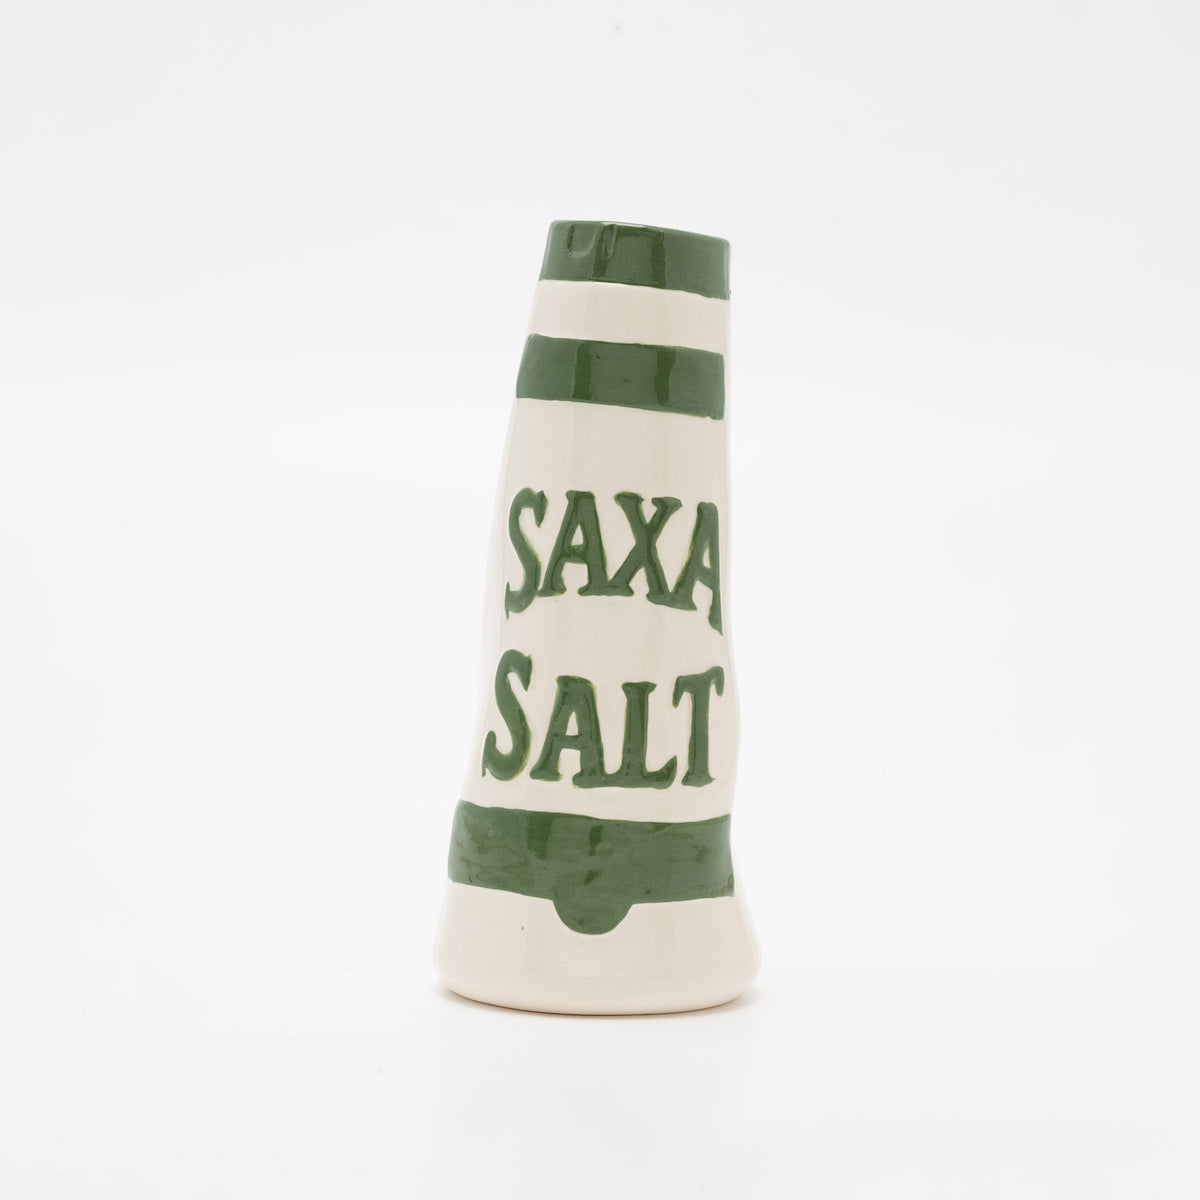 The Austin Flowers Saxa Salt Vase Green